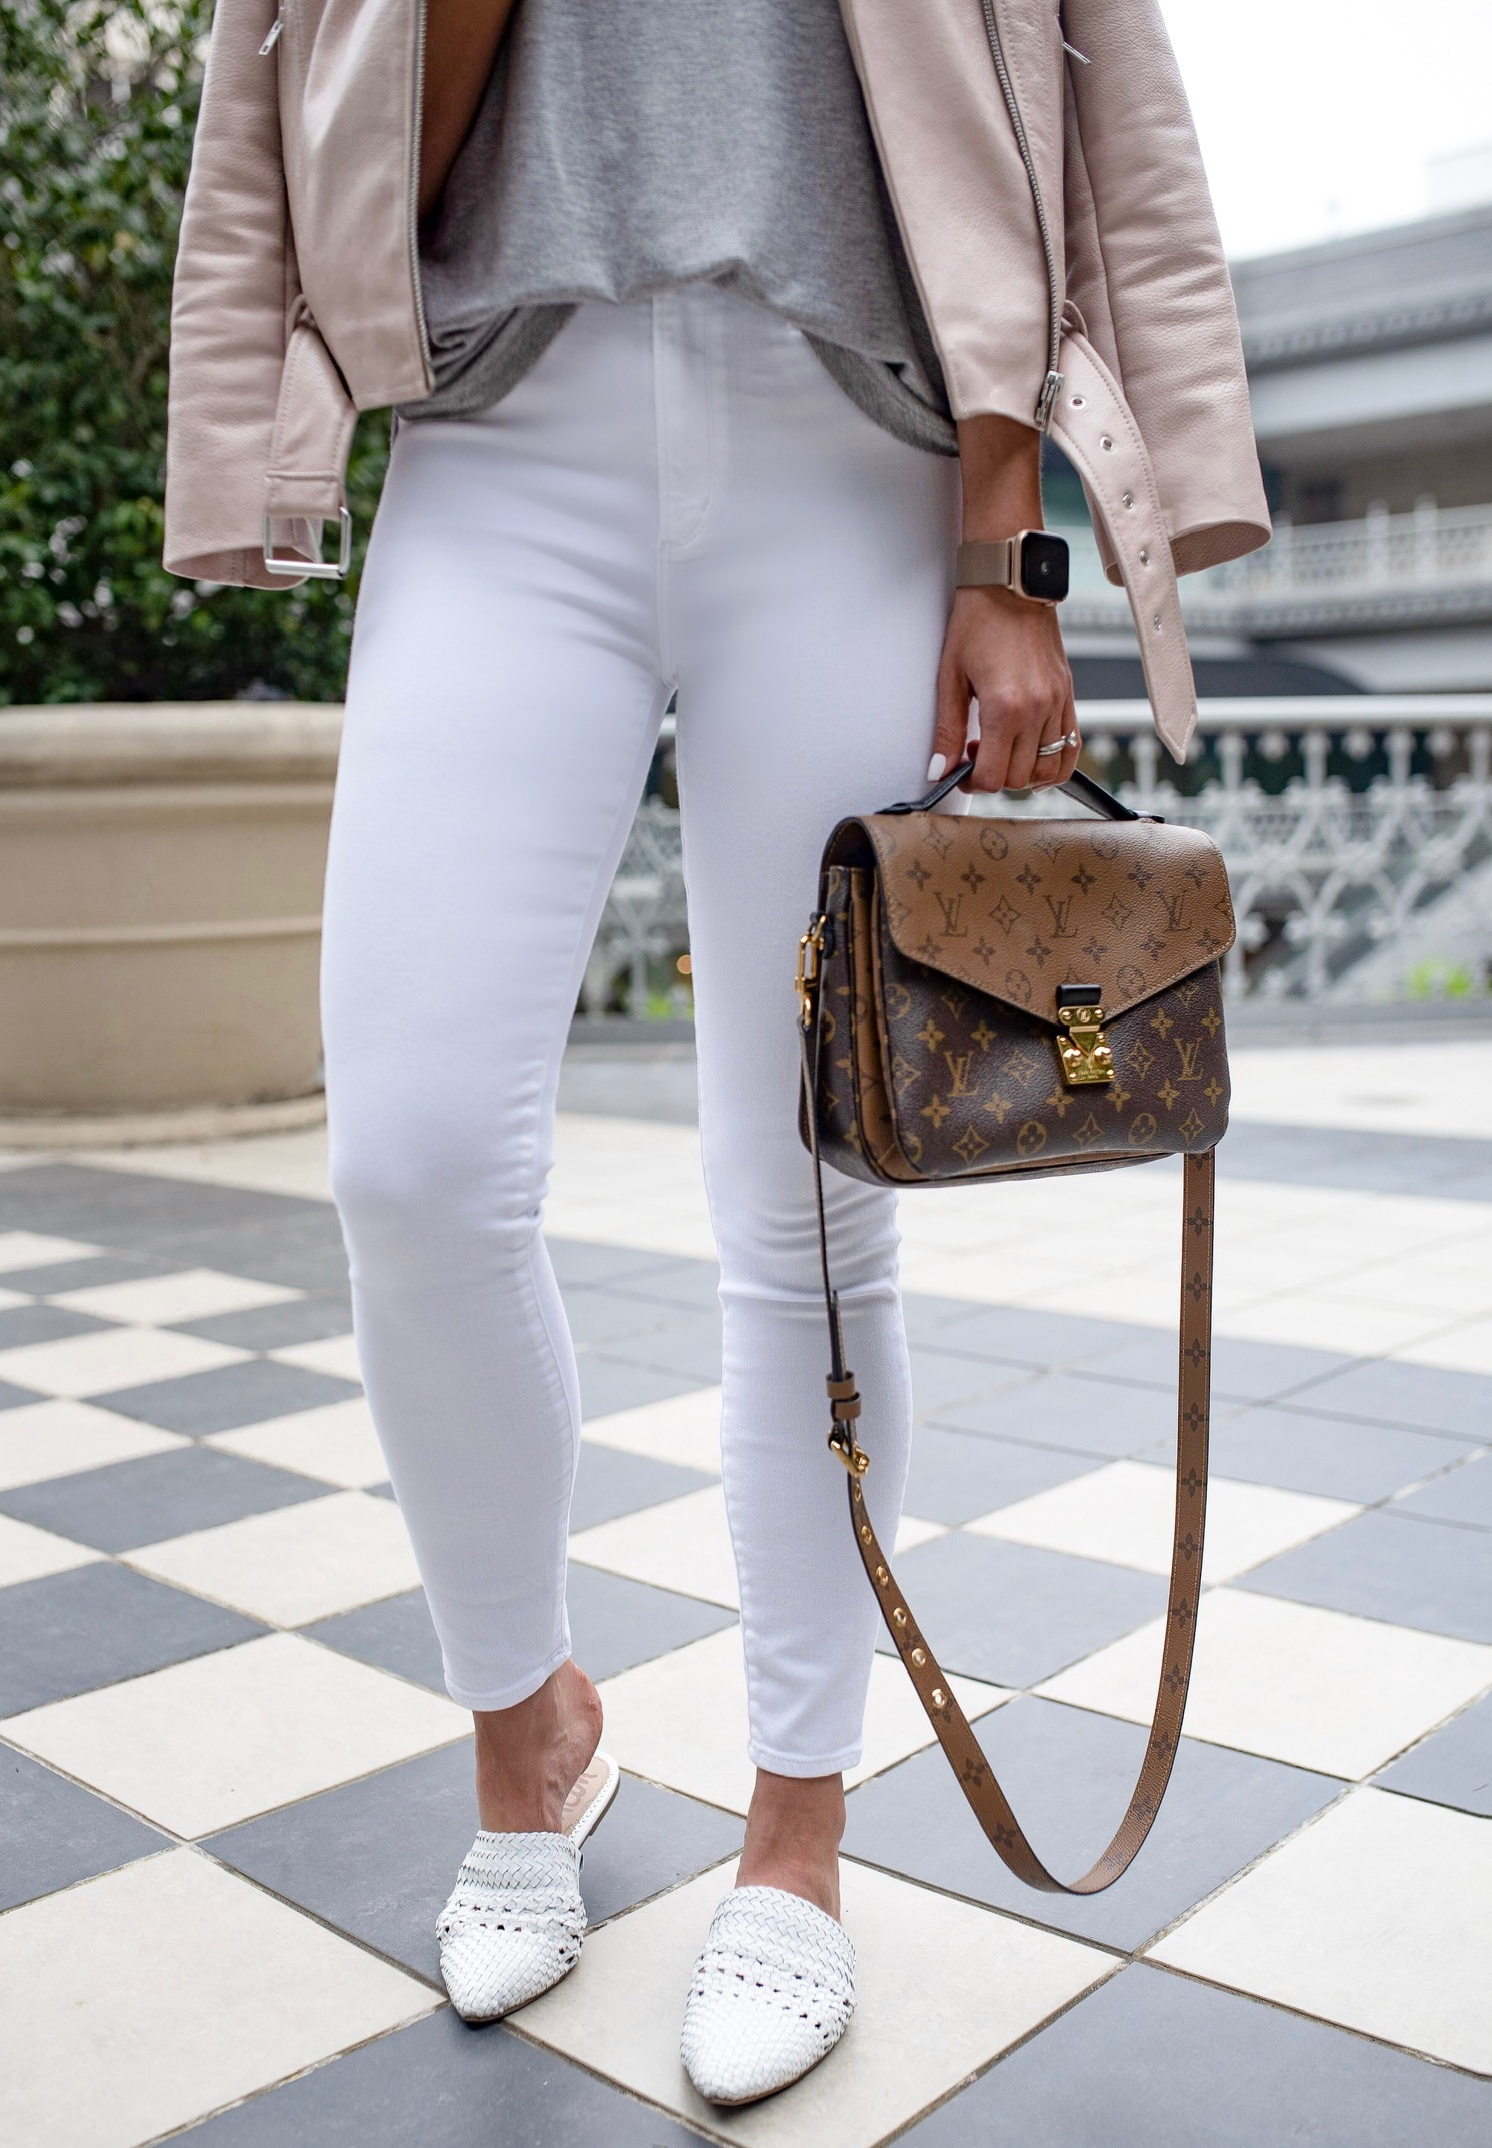 pochette metis designer bags from ebay, white jeans outfit